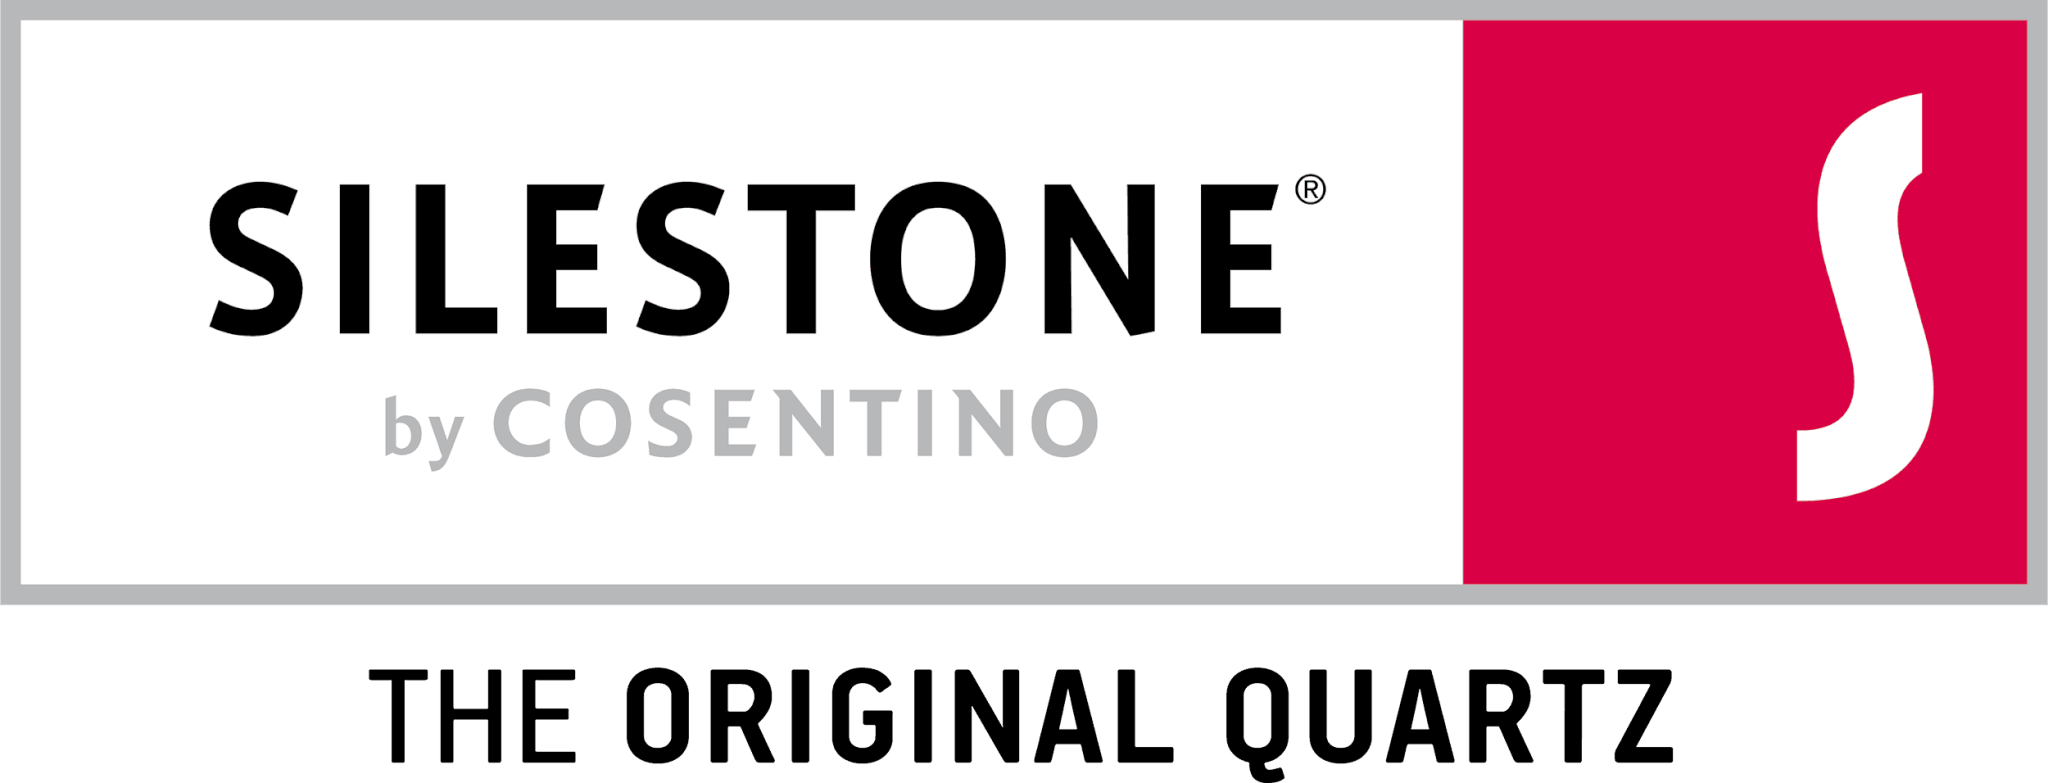 logo Silestone